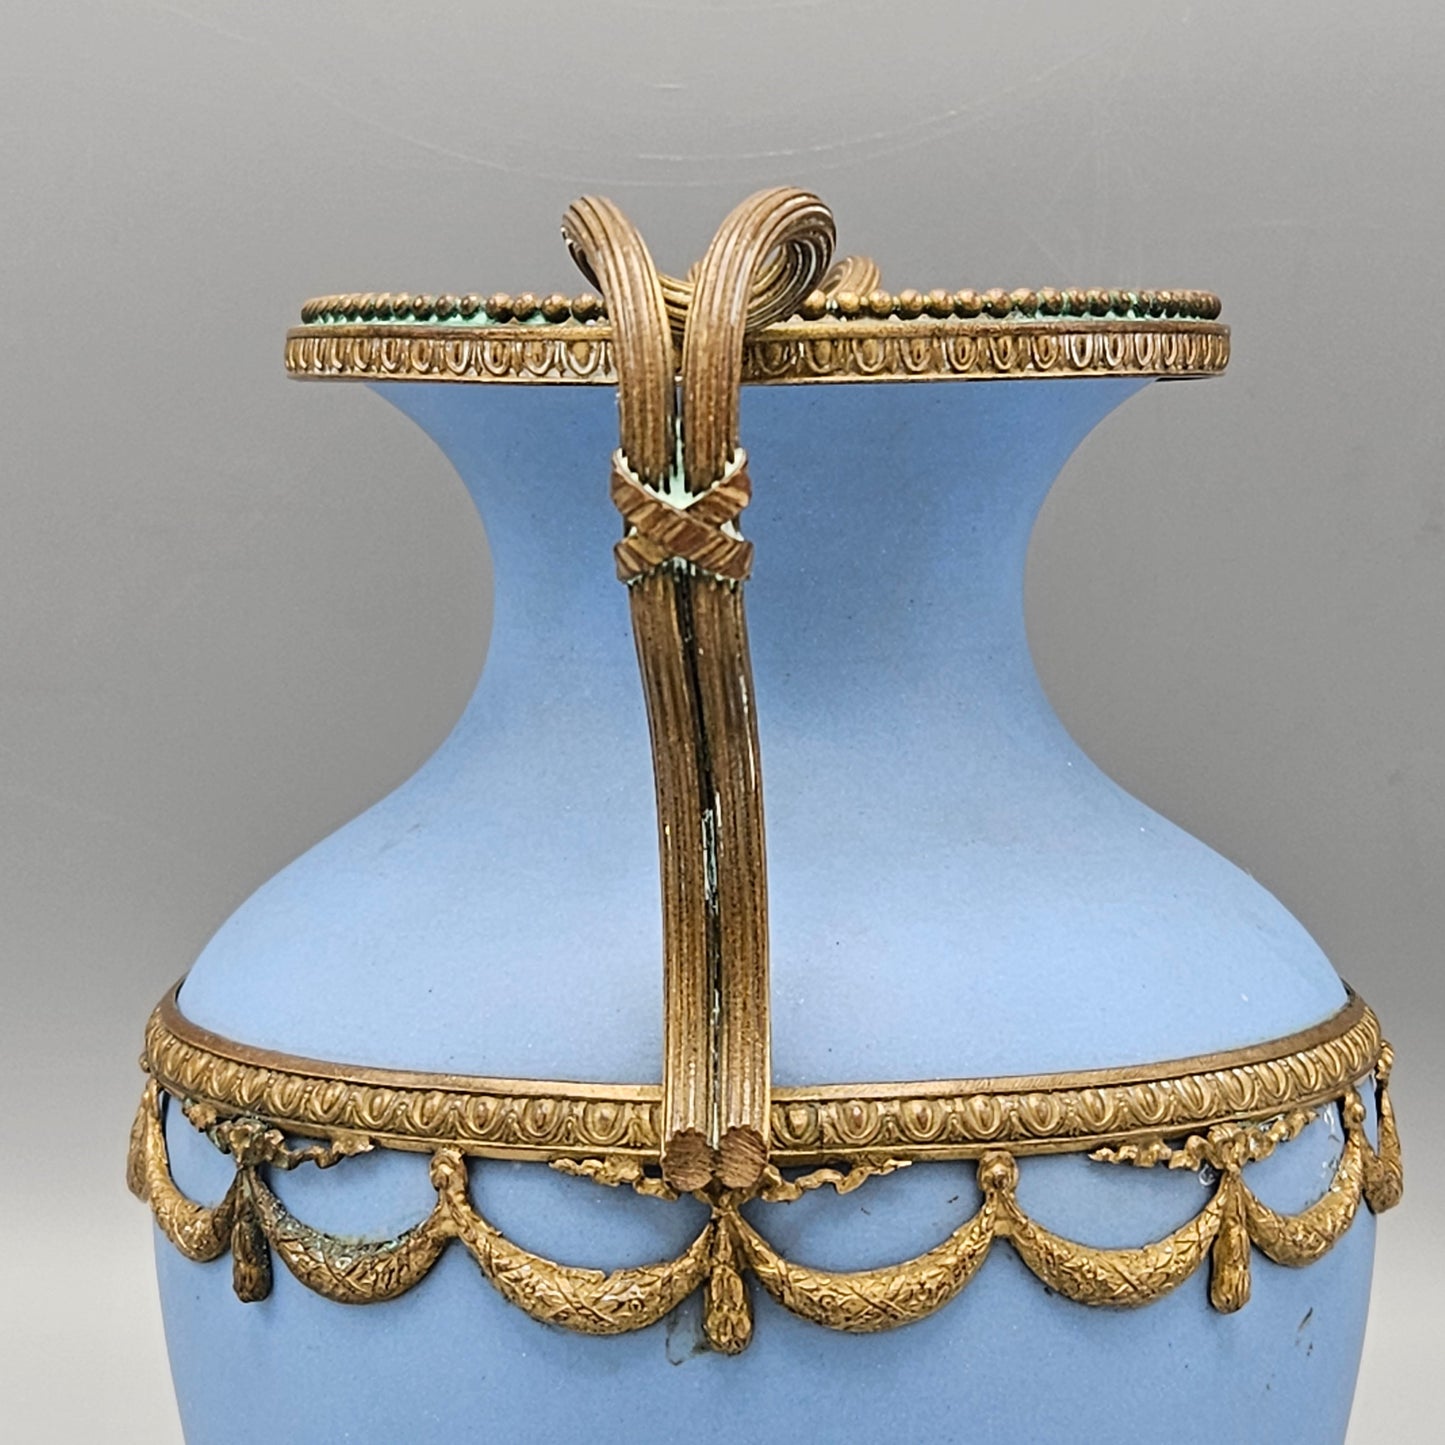 Antique Gilt Bronze Mounted Wedgwood Blue Jasperware Portland Vase